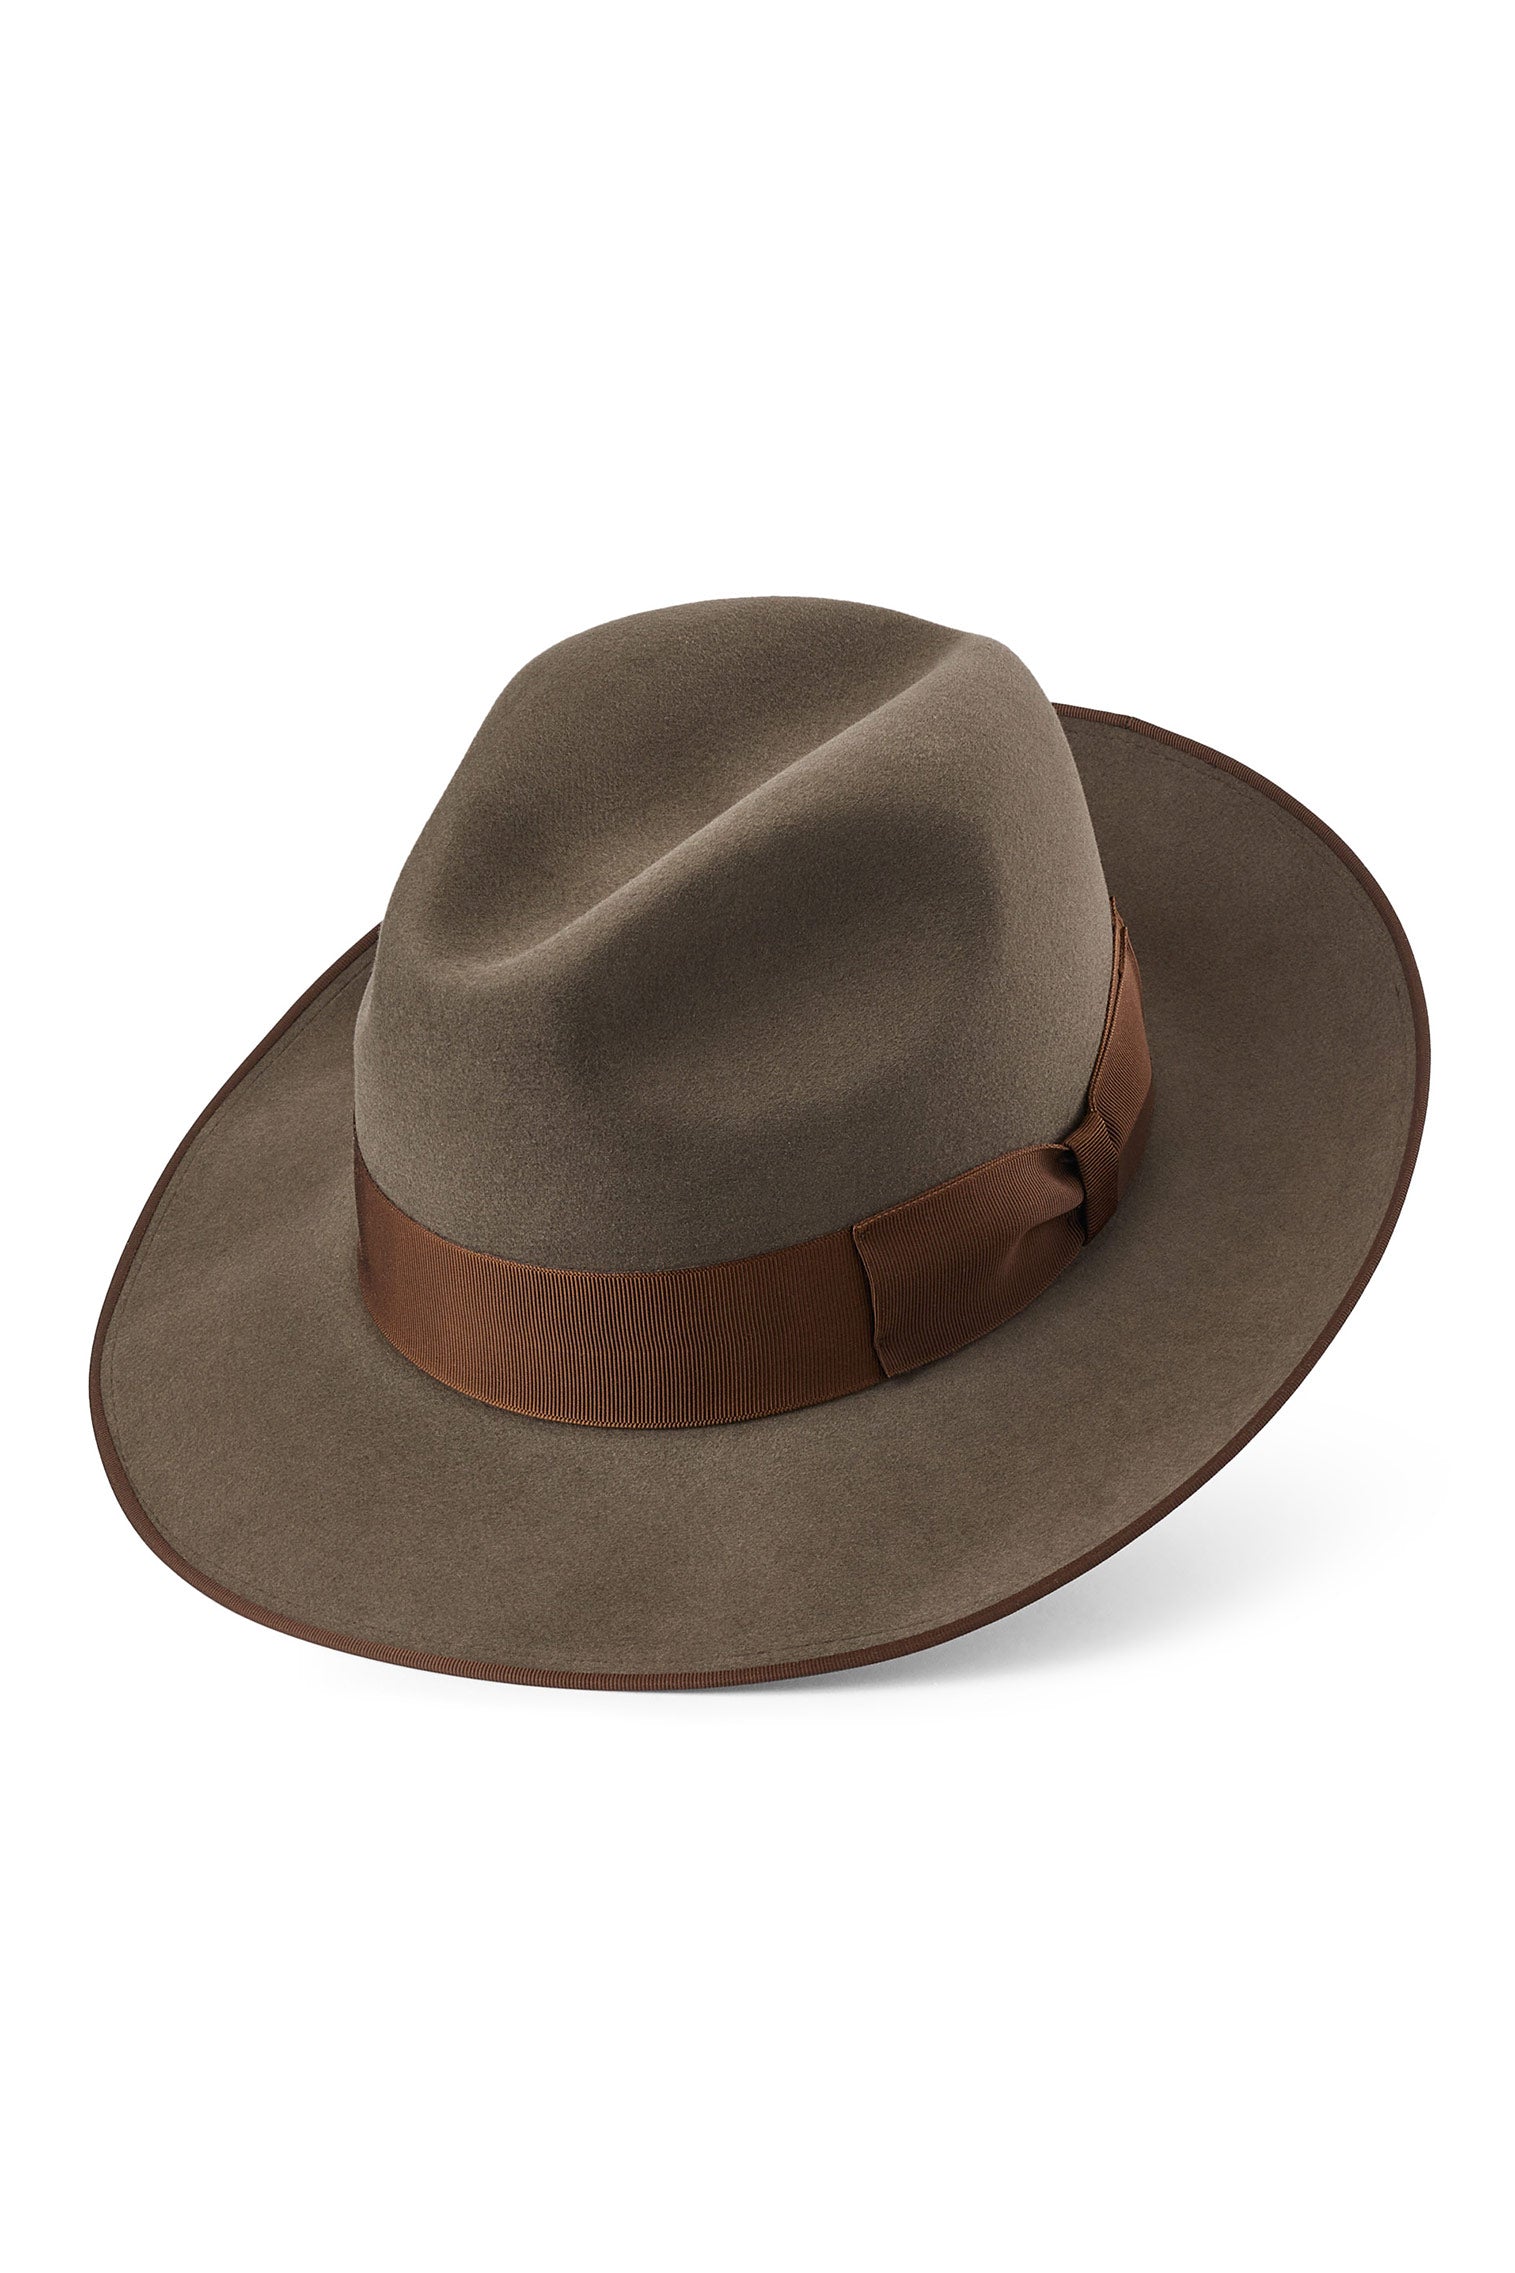 St James's Fedora - Best Selling Hats - Lock & Co. Hatters London UK